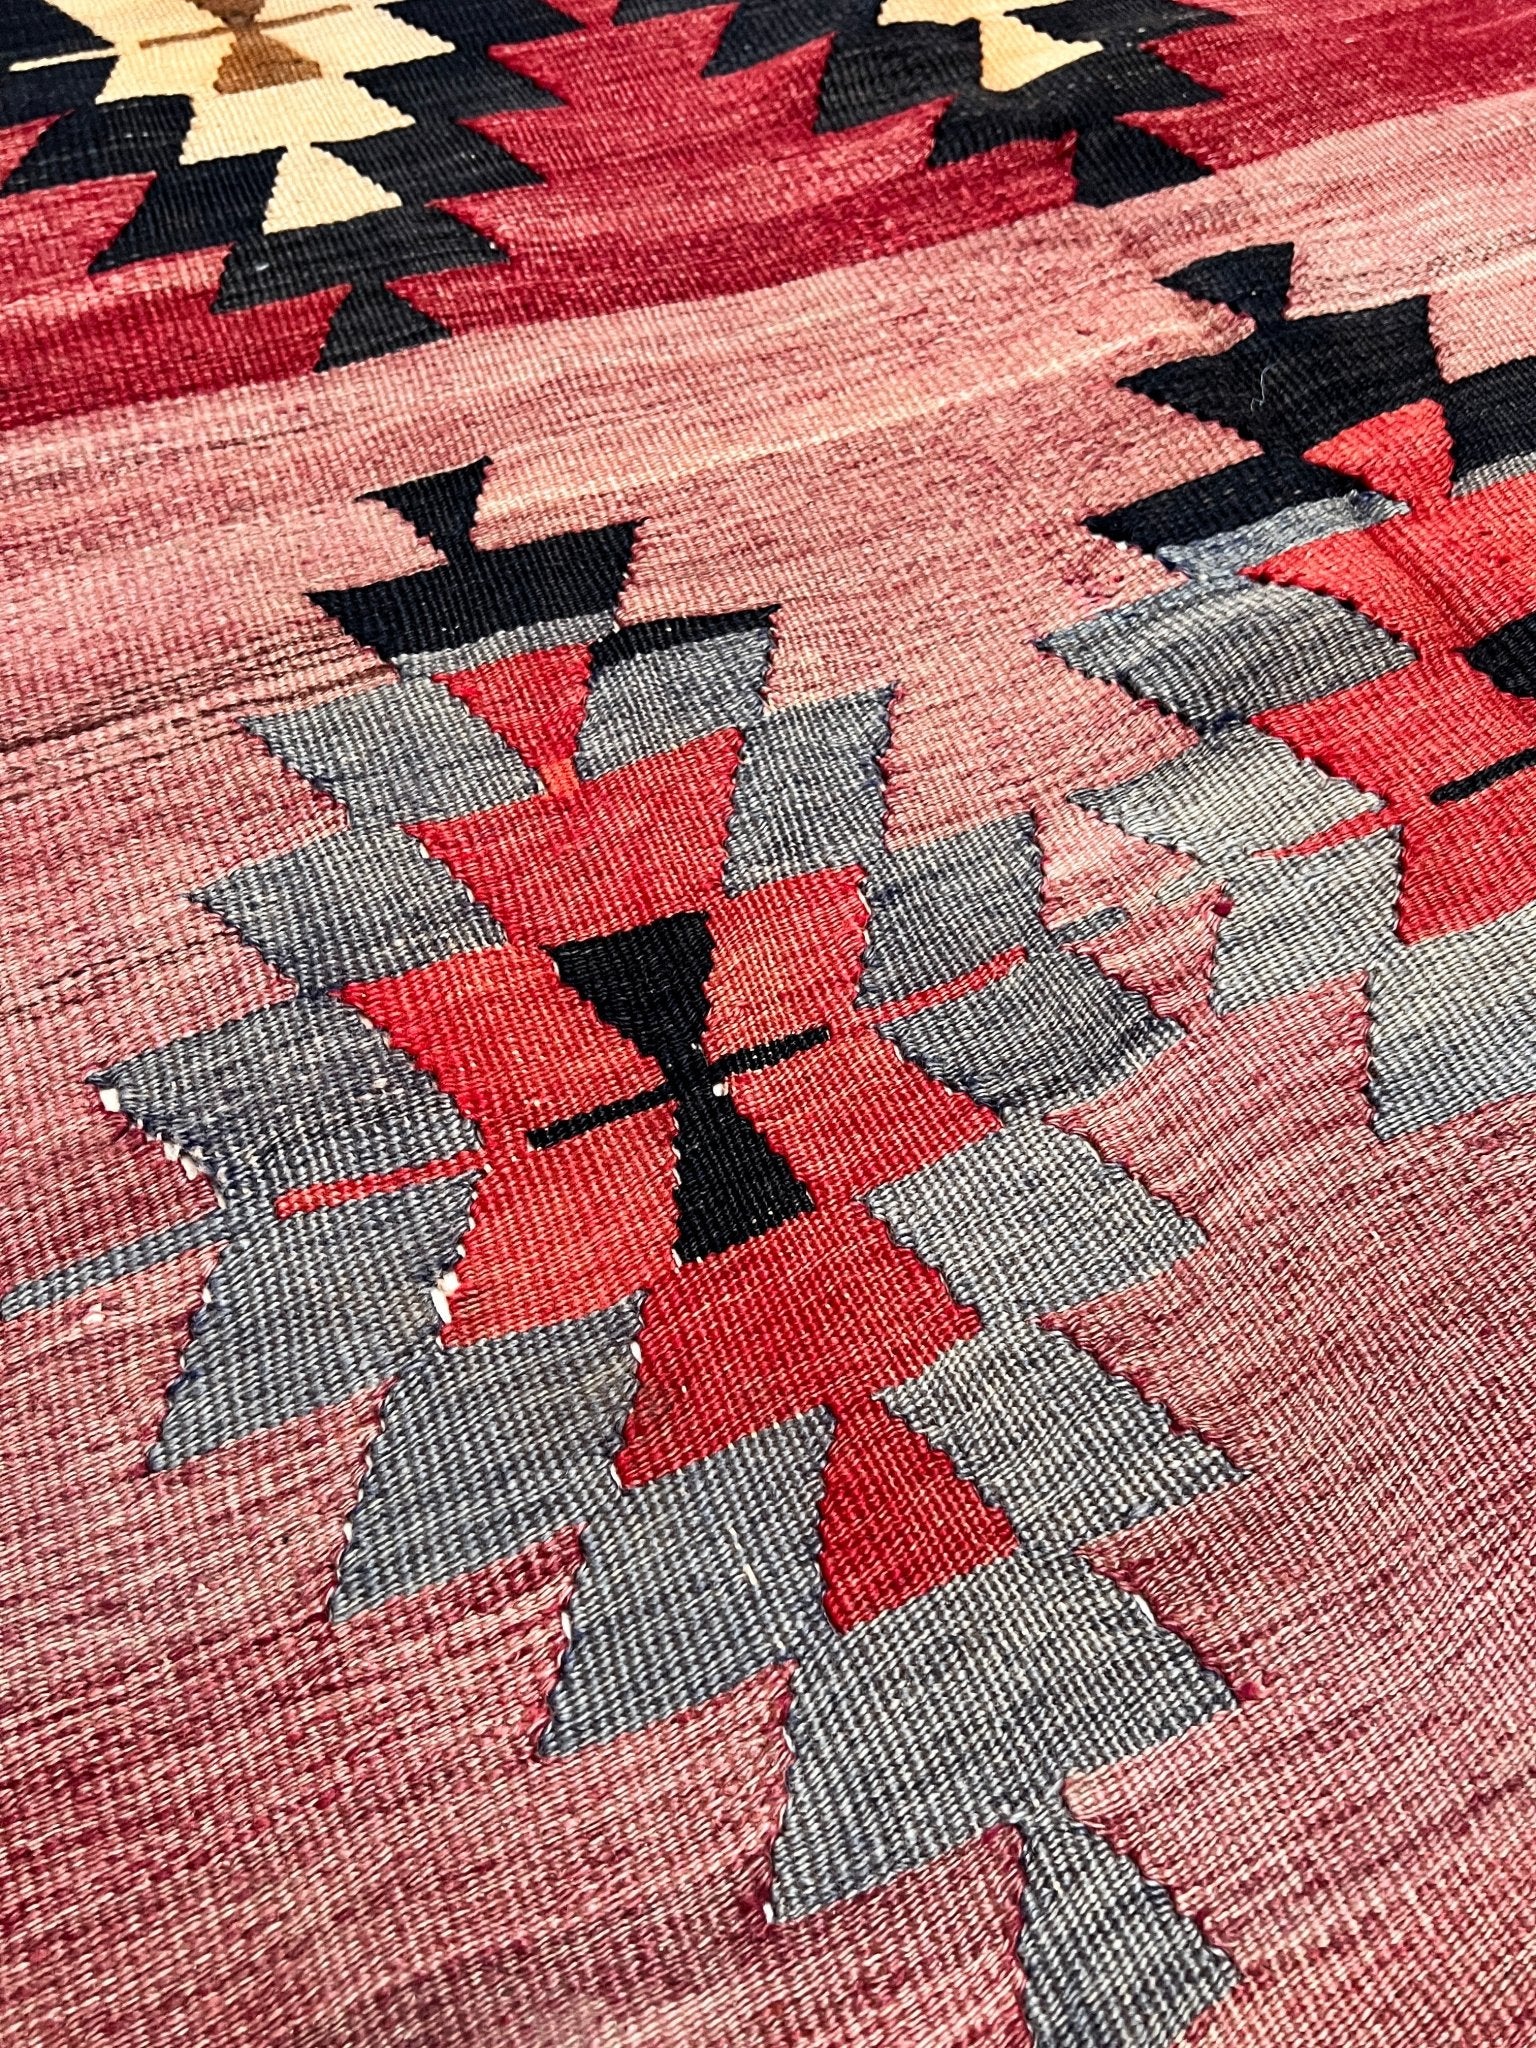 pergamum Vintage turkish kilim rug shop San francisco bay area. Navajo style rug. Buy turkish rug online